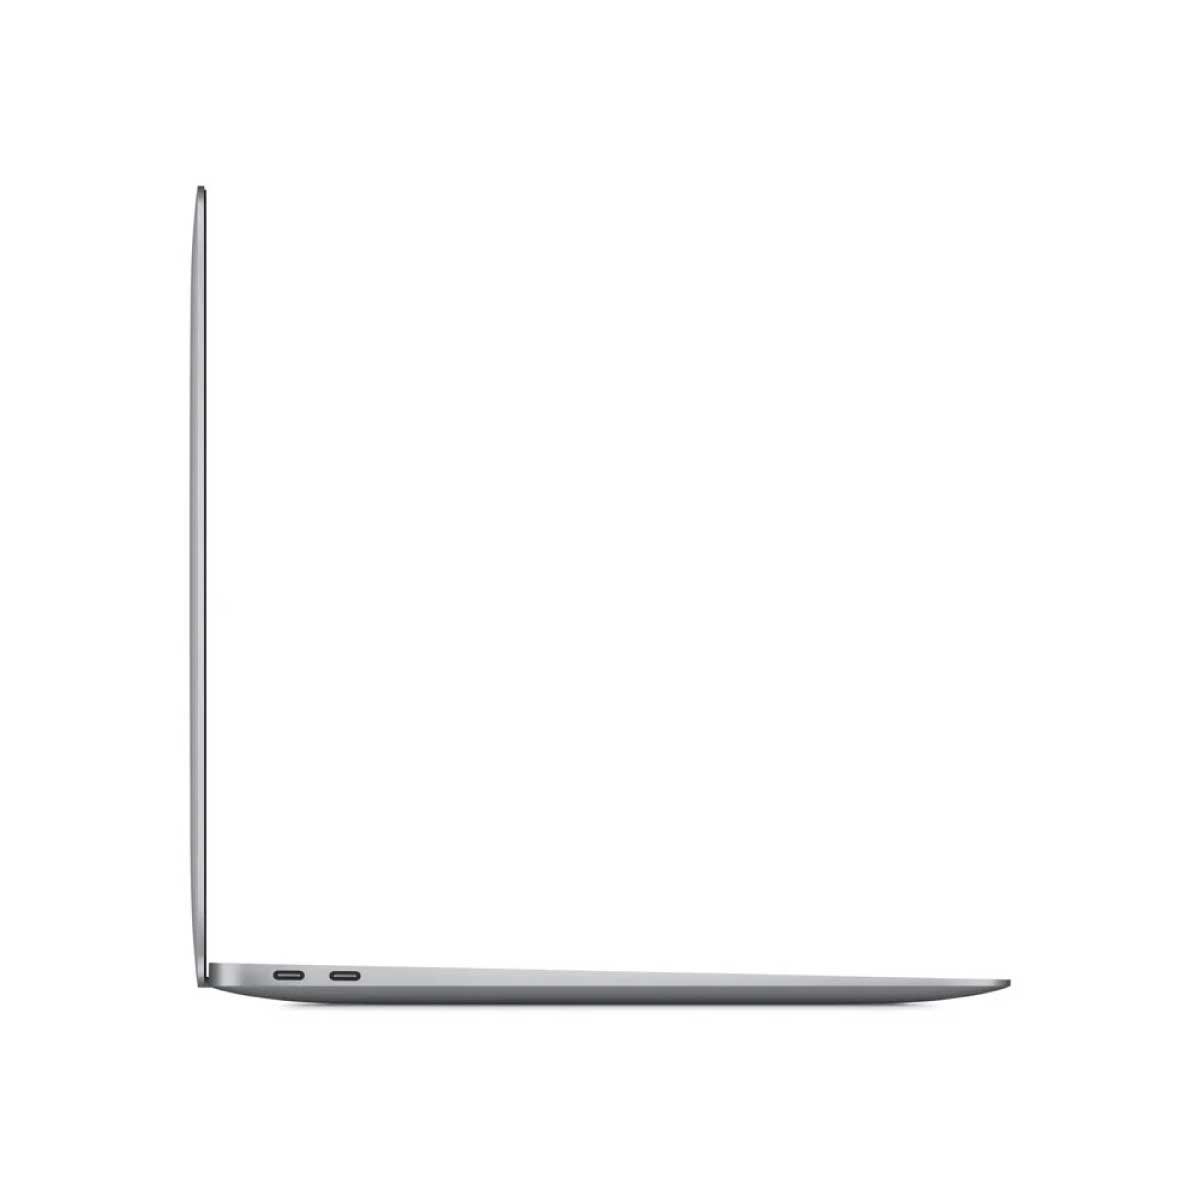 Apple MacBook Air (รุ่น 13 นิ้ว, ชิป M1) 256GB Space Gray